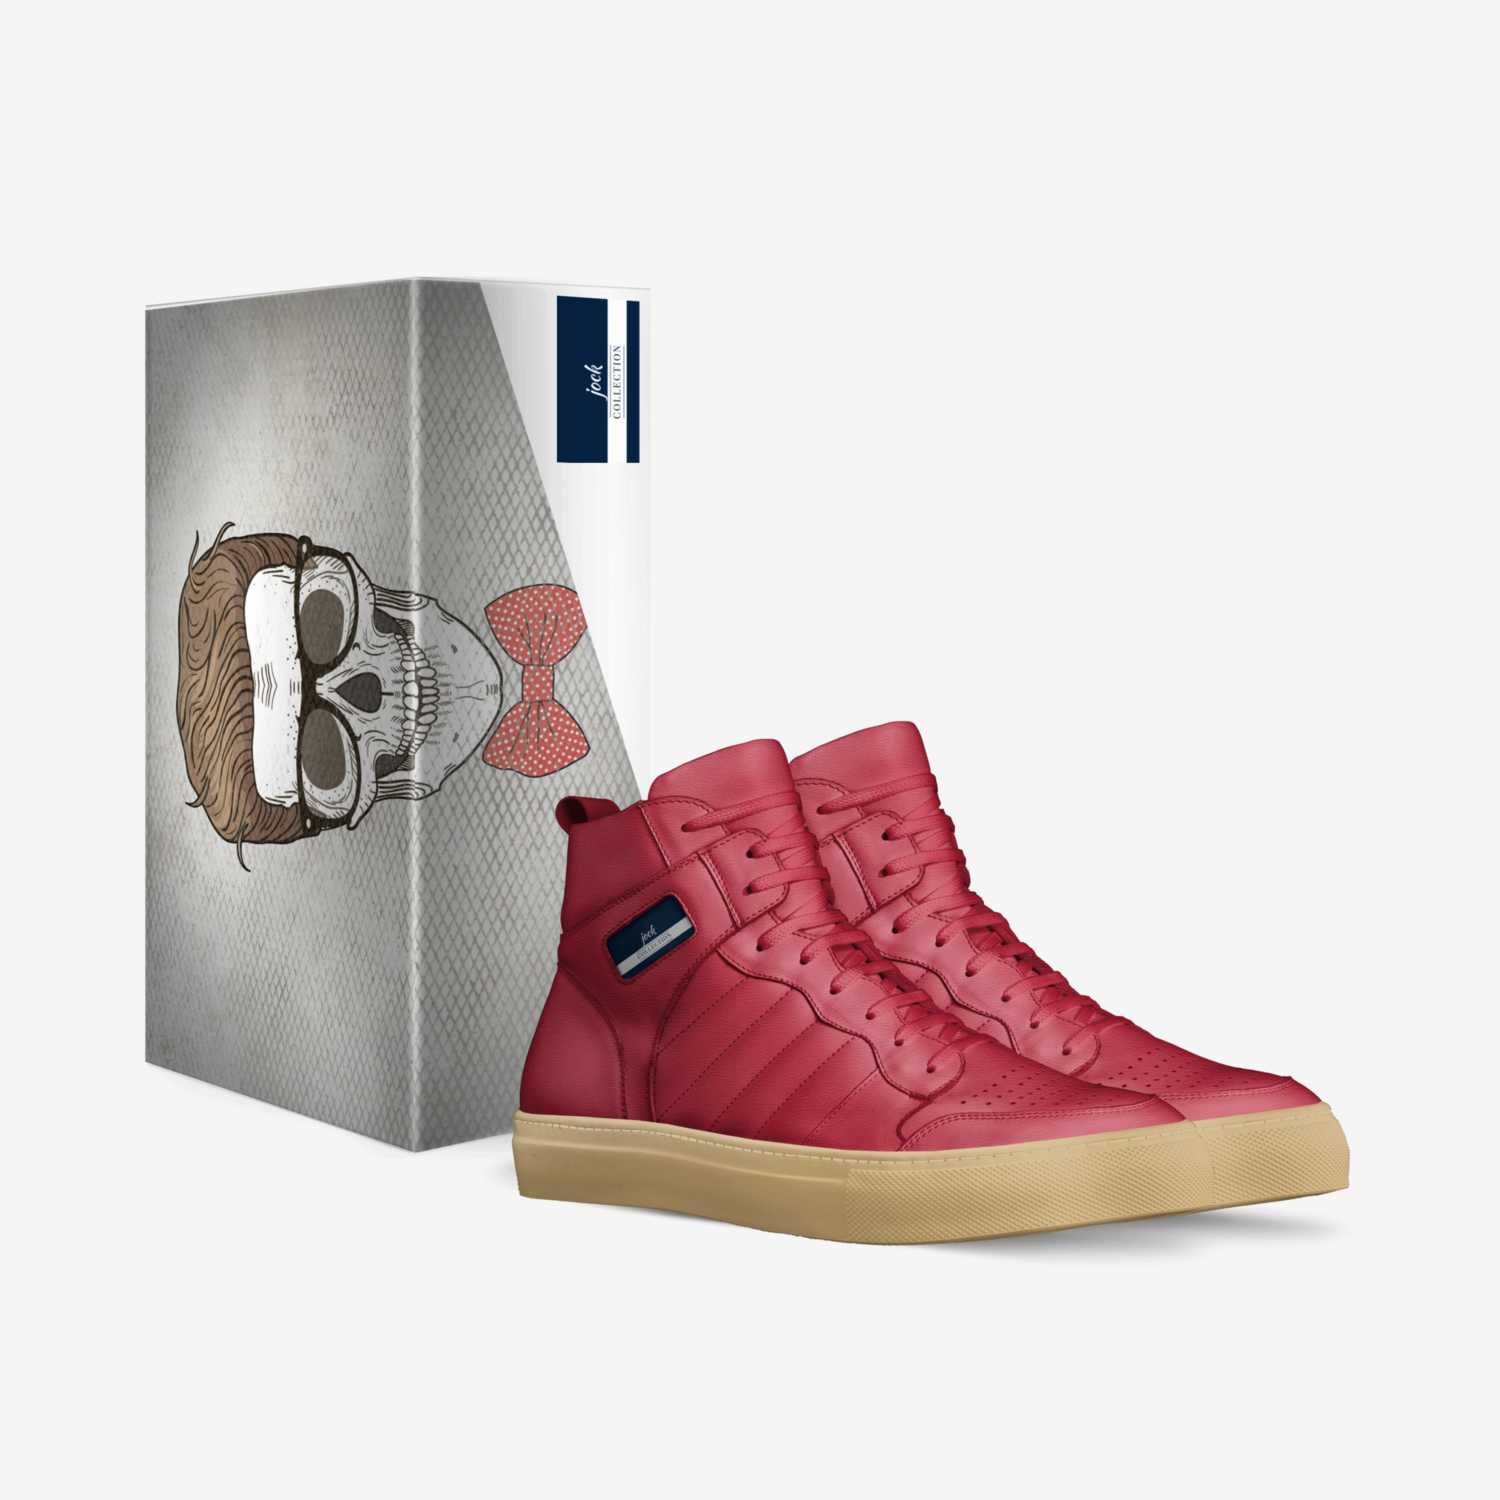 jock custom made in Italy shoes by Jakerrius Bates | Box view